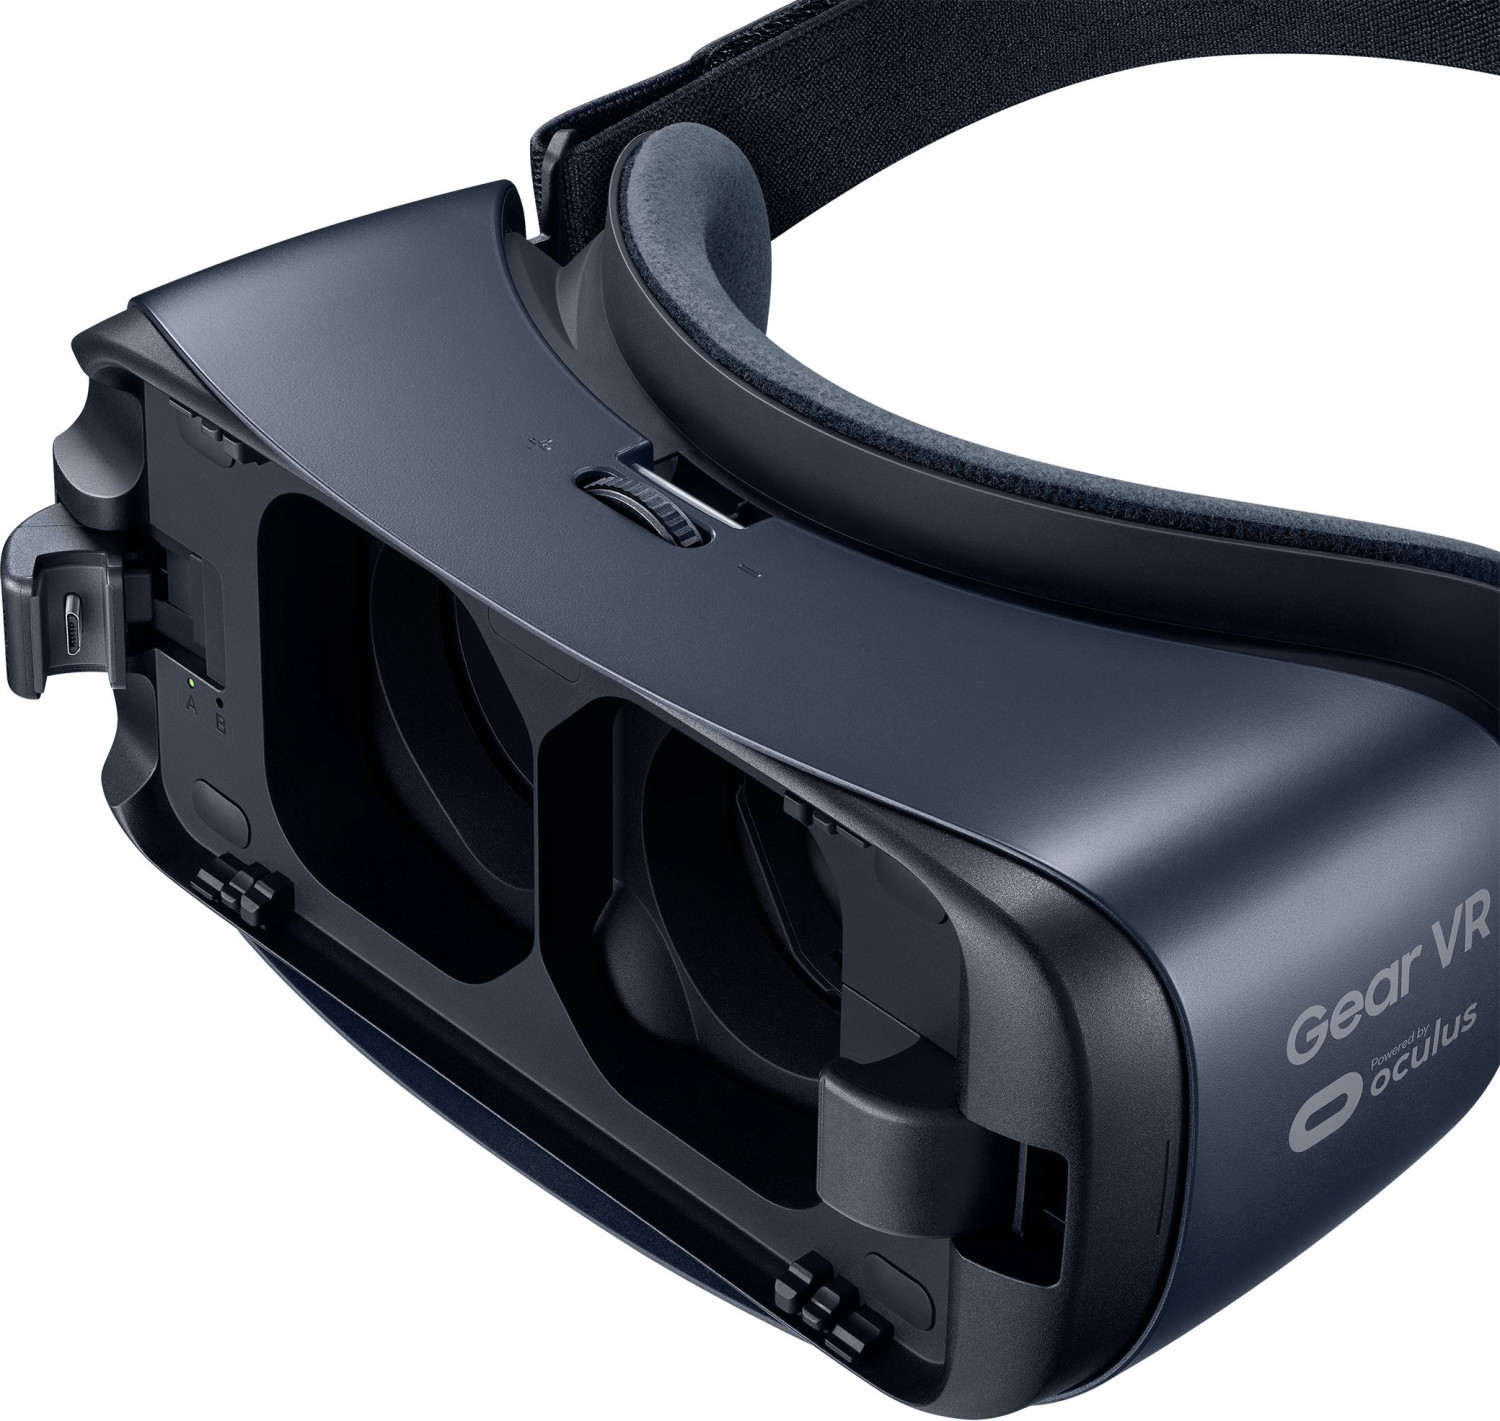 Samsung vr oculus. Samsung Gear VR r323. Samsung Gear VR 323. Очки Samsung Gear VR. Samsung Gear VR SM-r325.